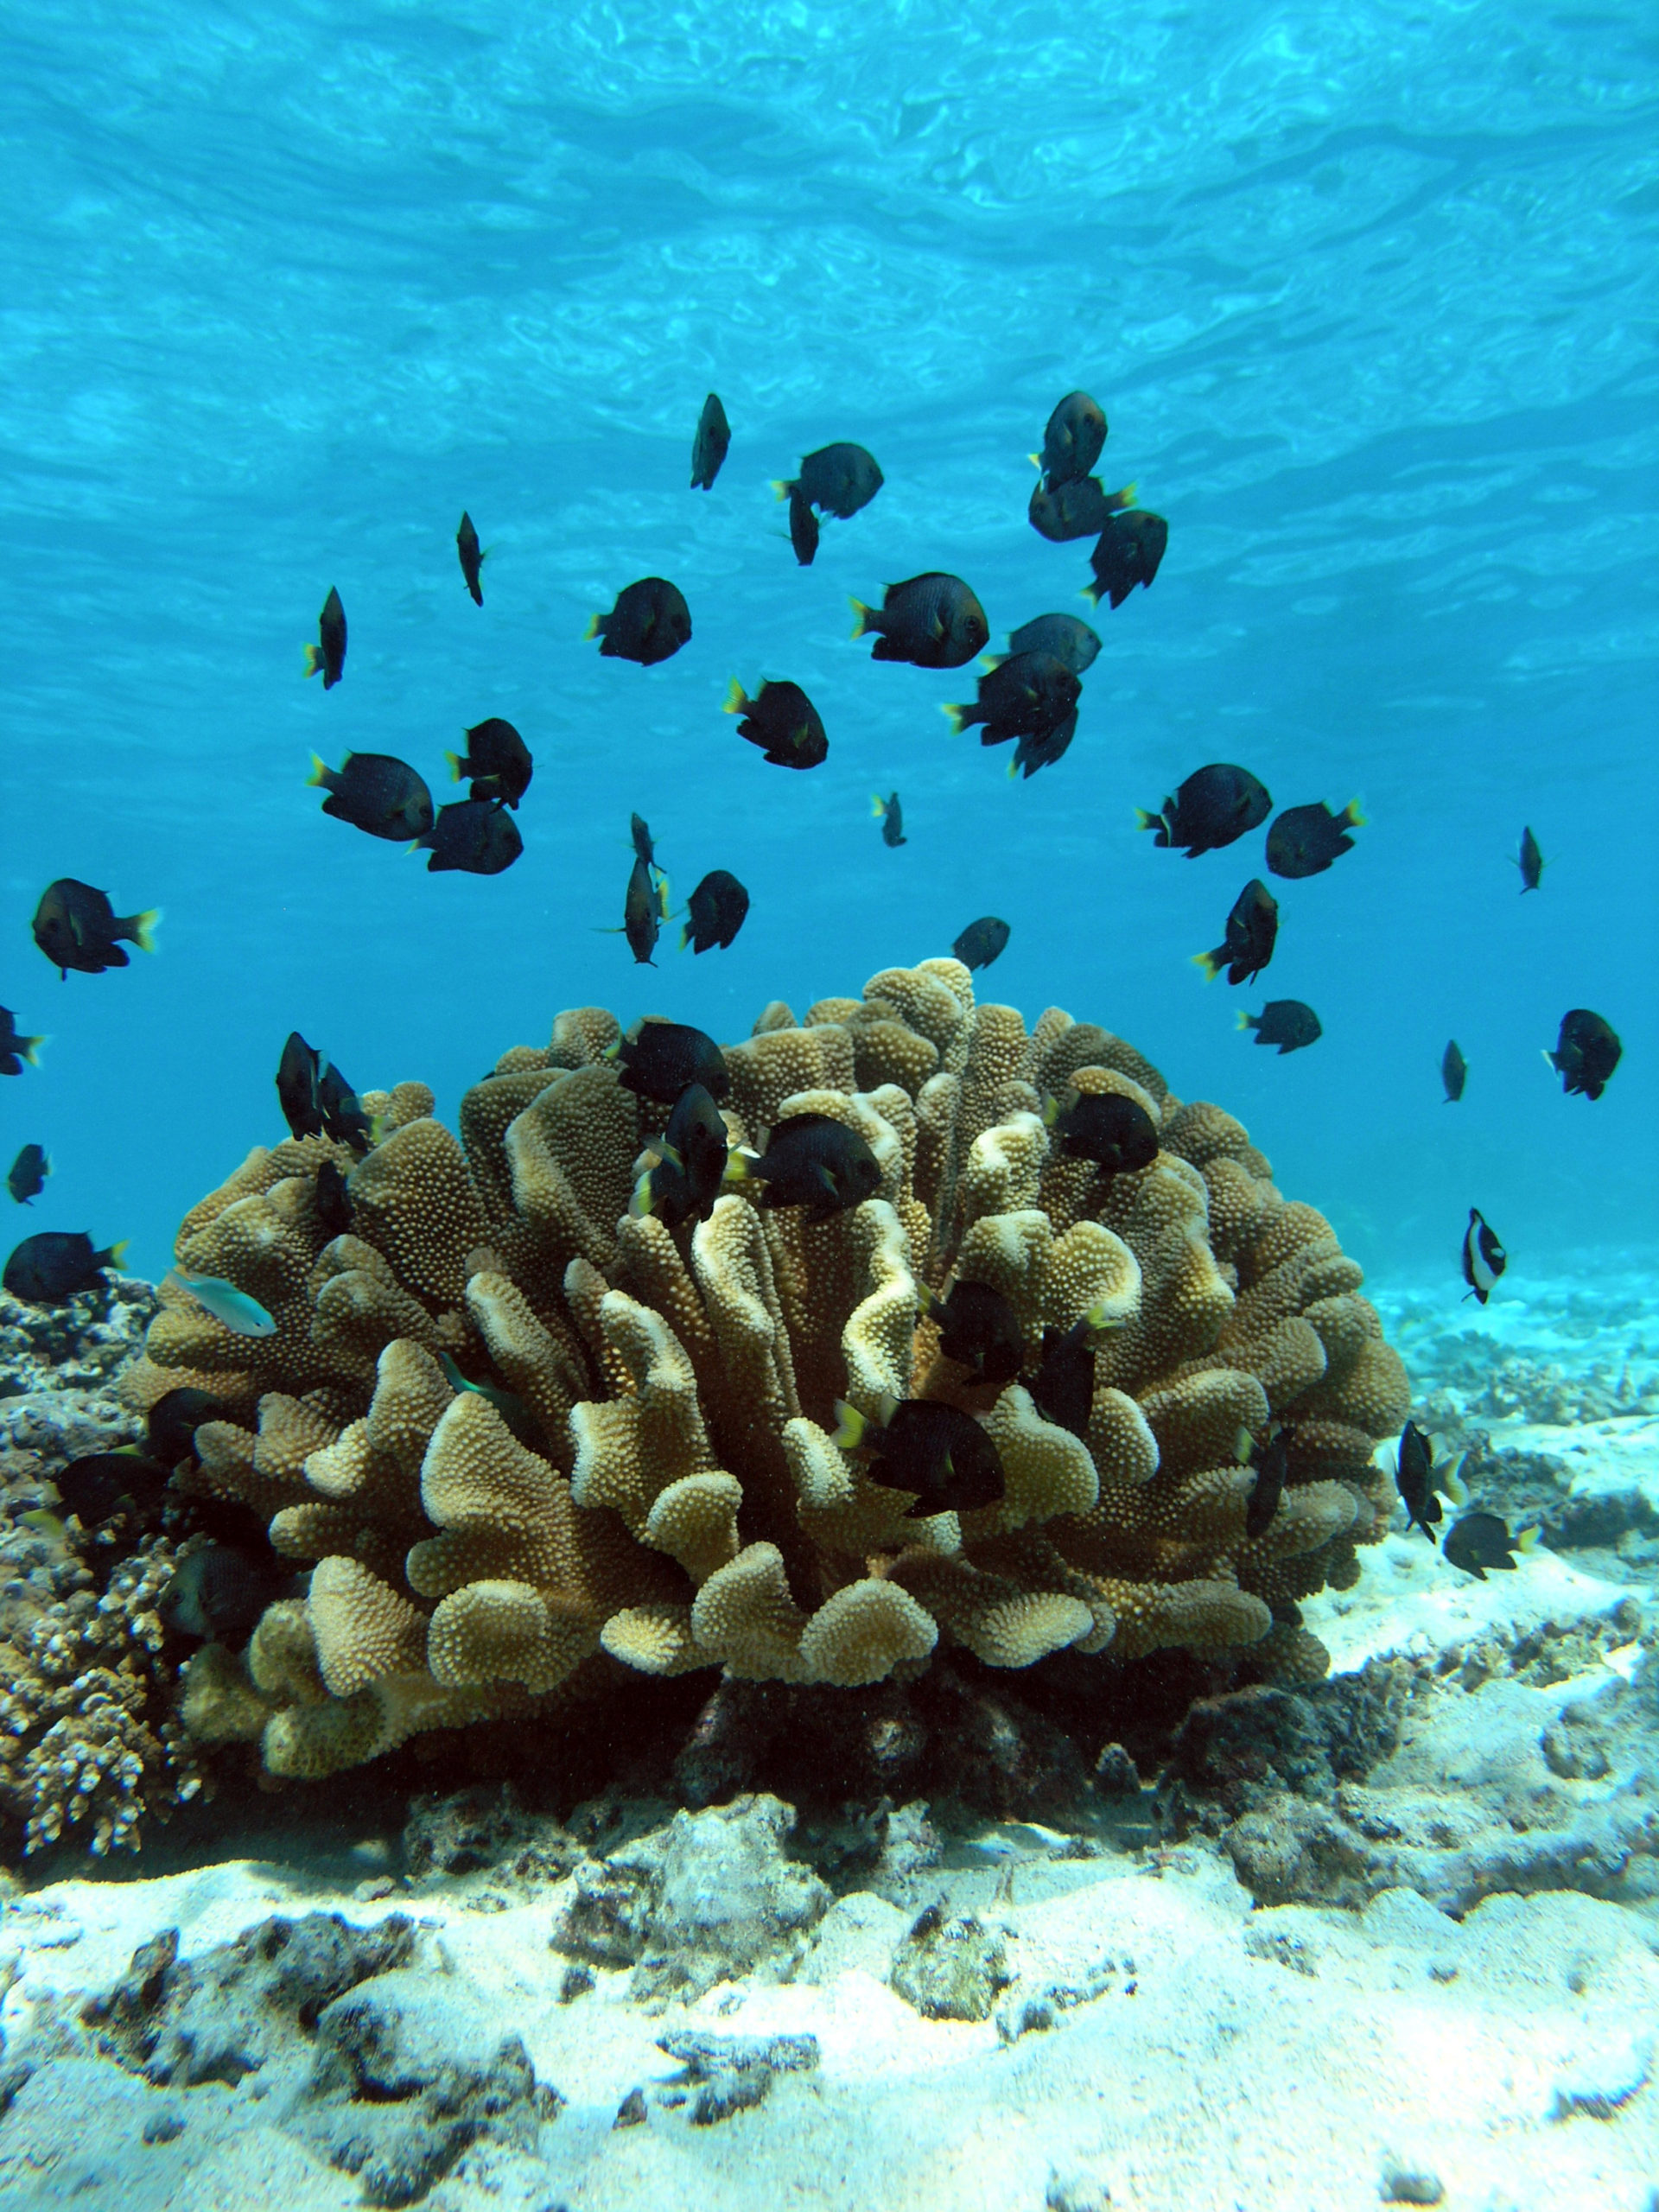 Damselfish and their coral host (Pocillopora eydouxi).